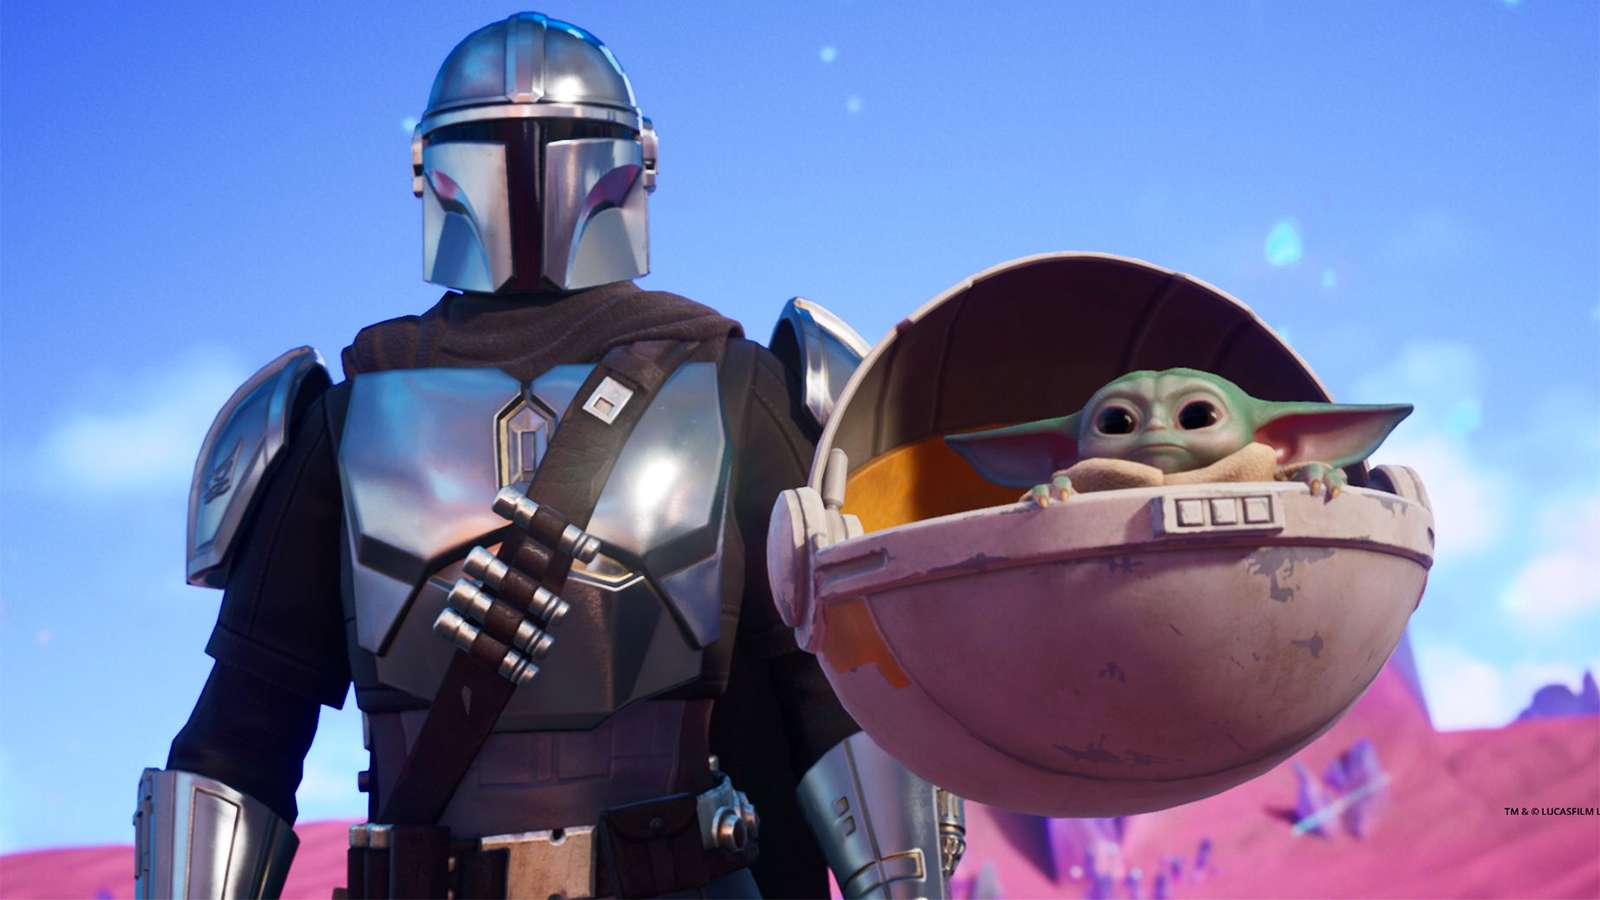 Mandalorian and Baby Yoda in Fortnite